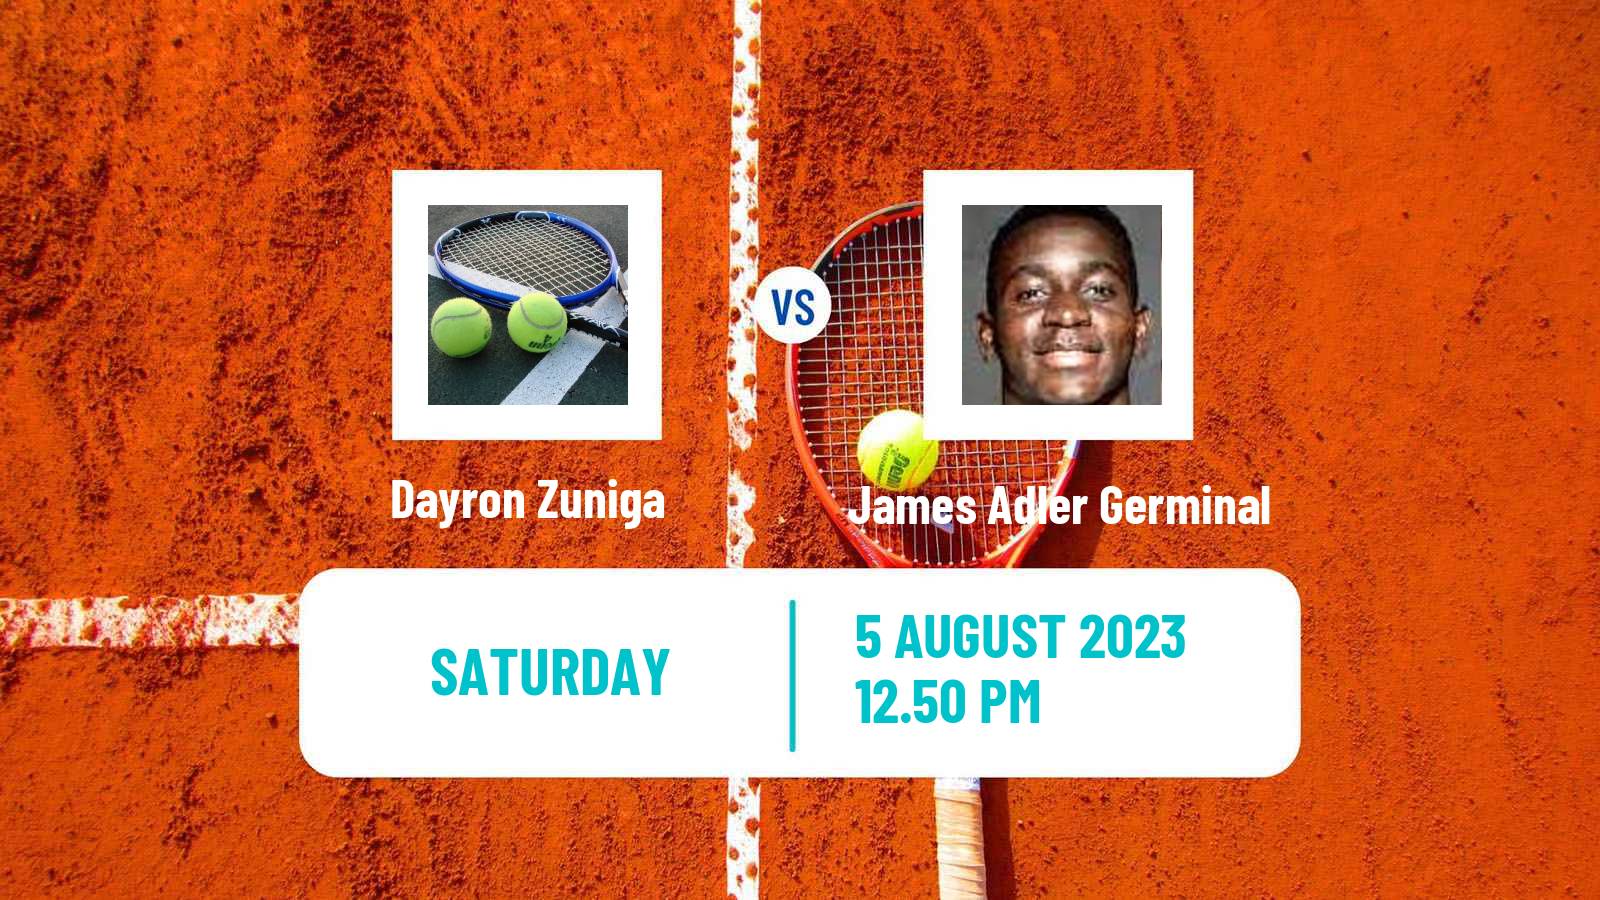 Tennis Davis Cup Group IV Dayron Zuniga - James Adler Germinal